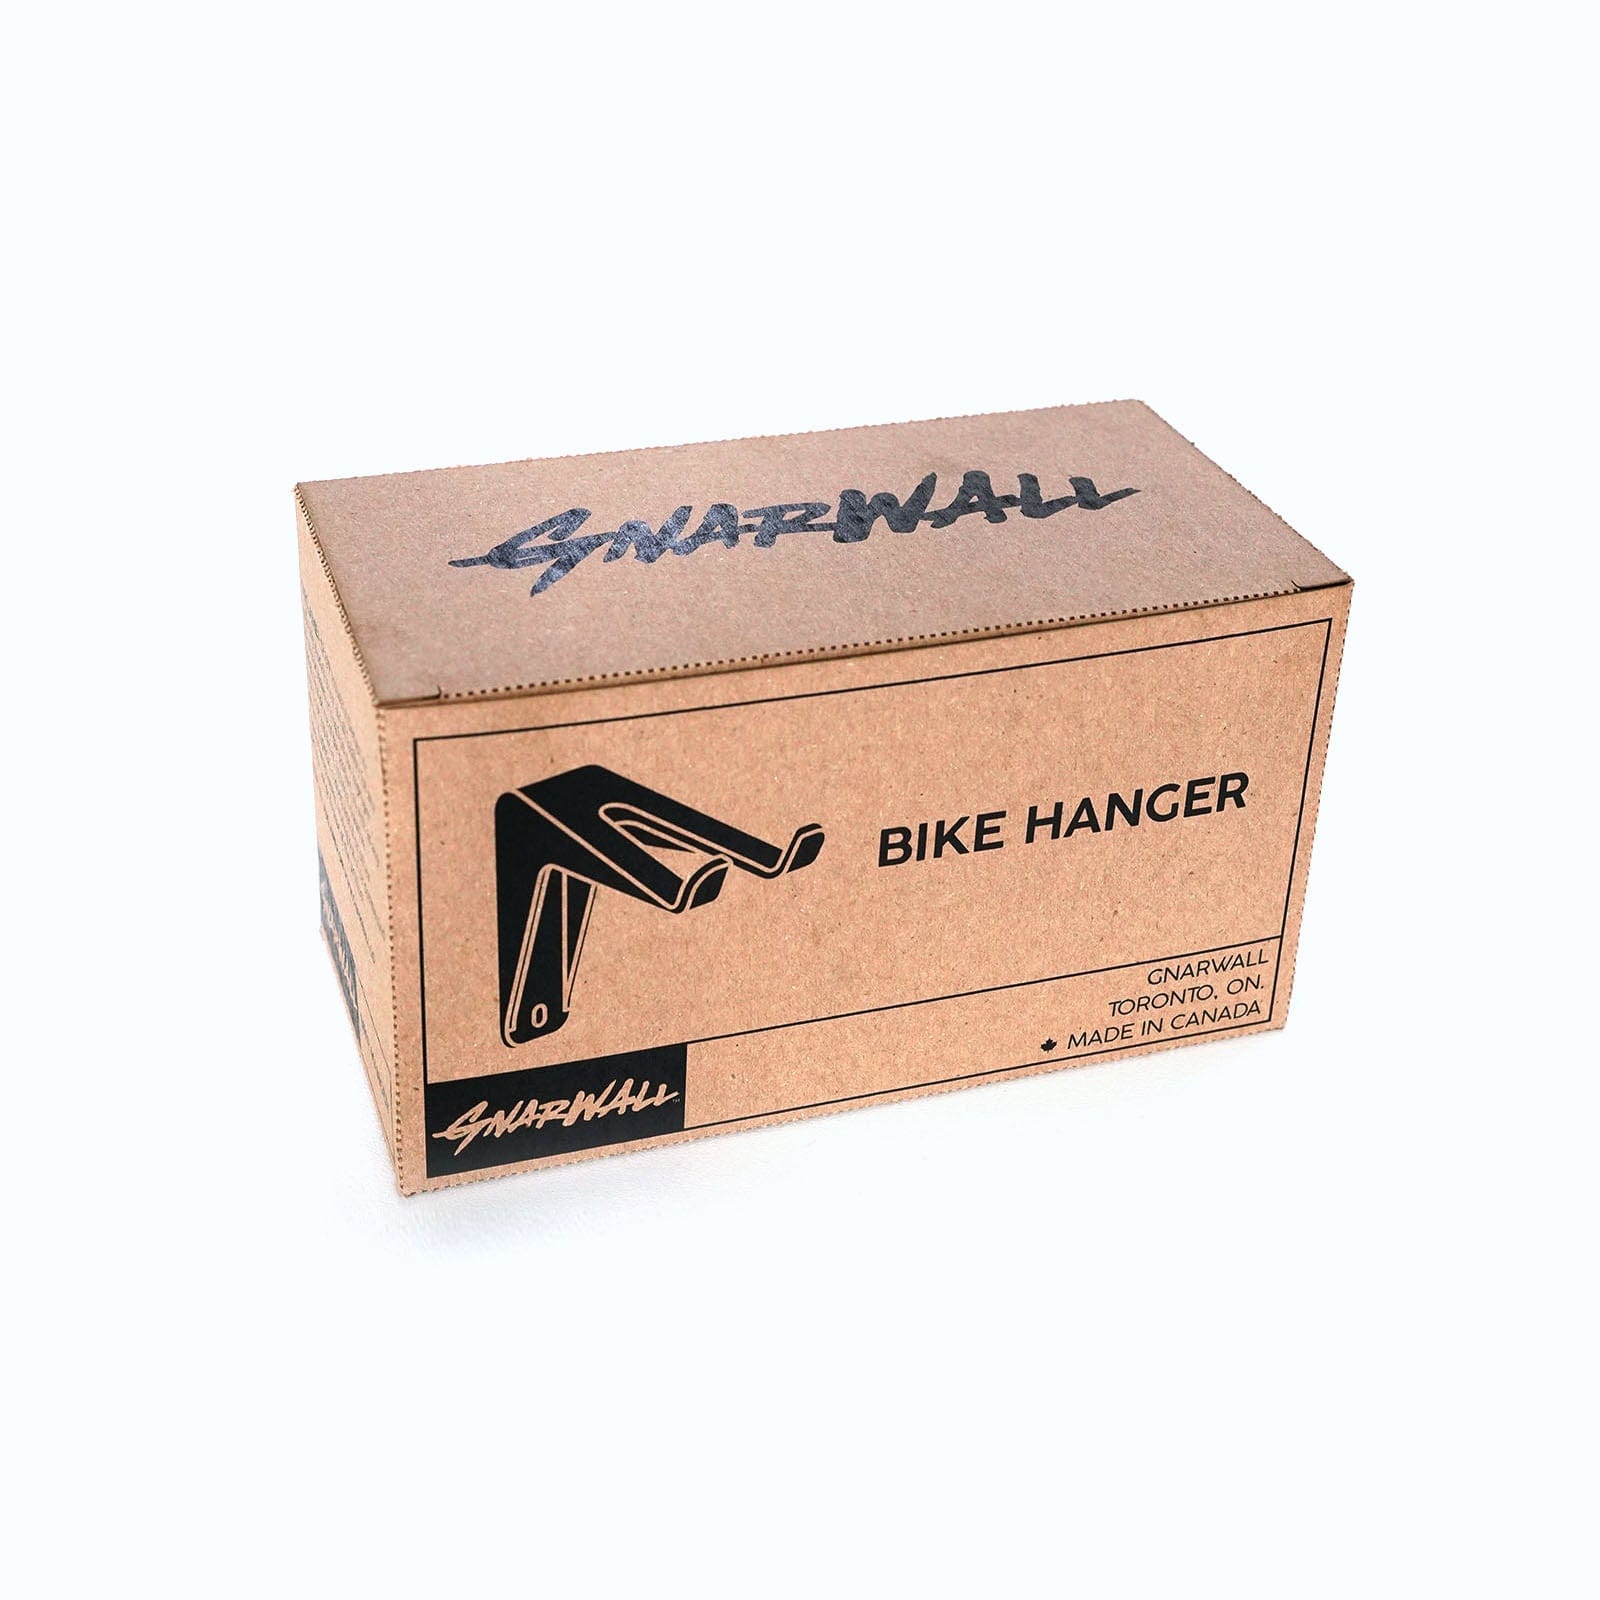 Silver Gnarwall Bike Hanger - GNARWALL